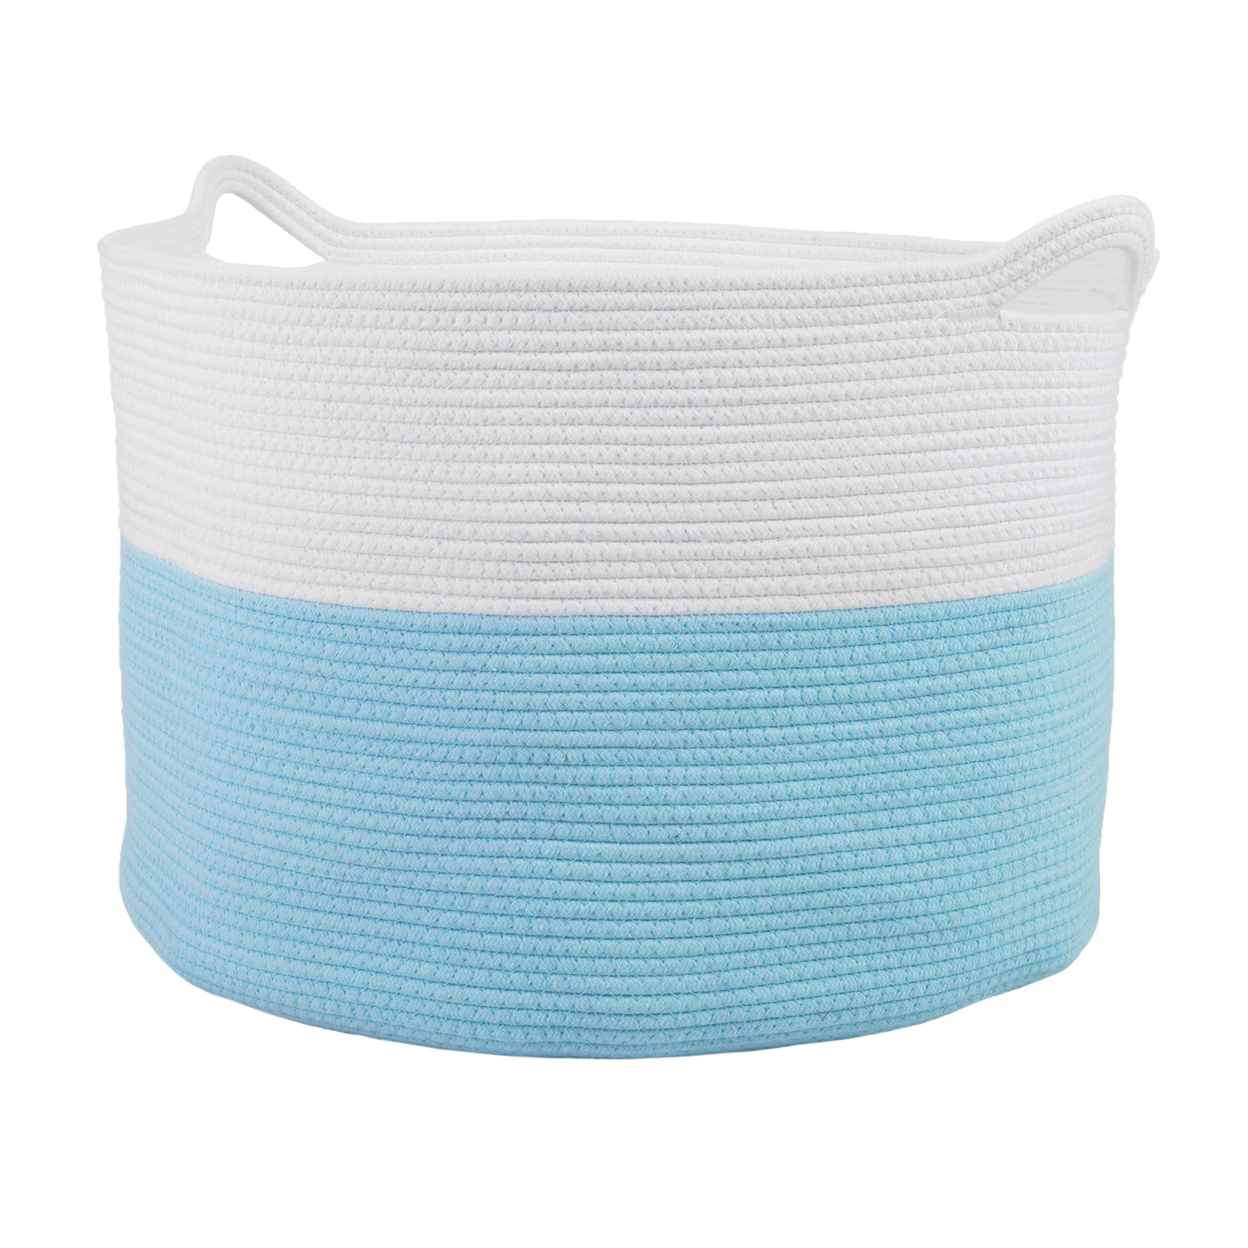 XL Laundry Basket Cotton Rope Clothes Basket Handles Home Storage Dcor